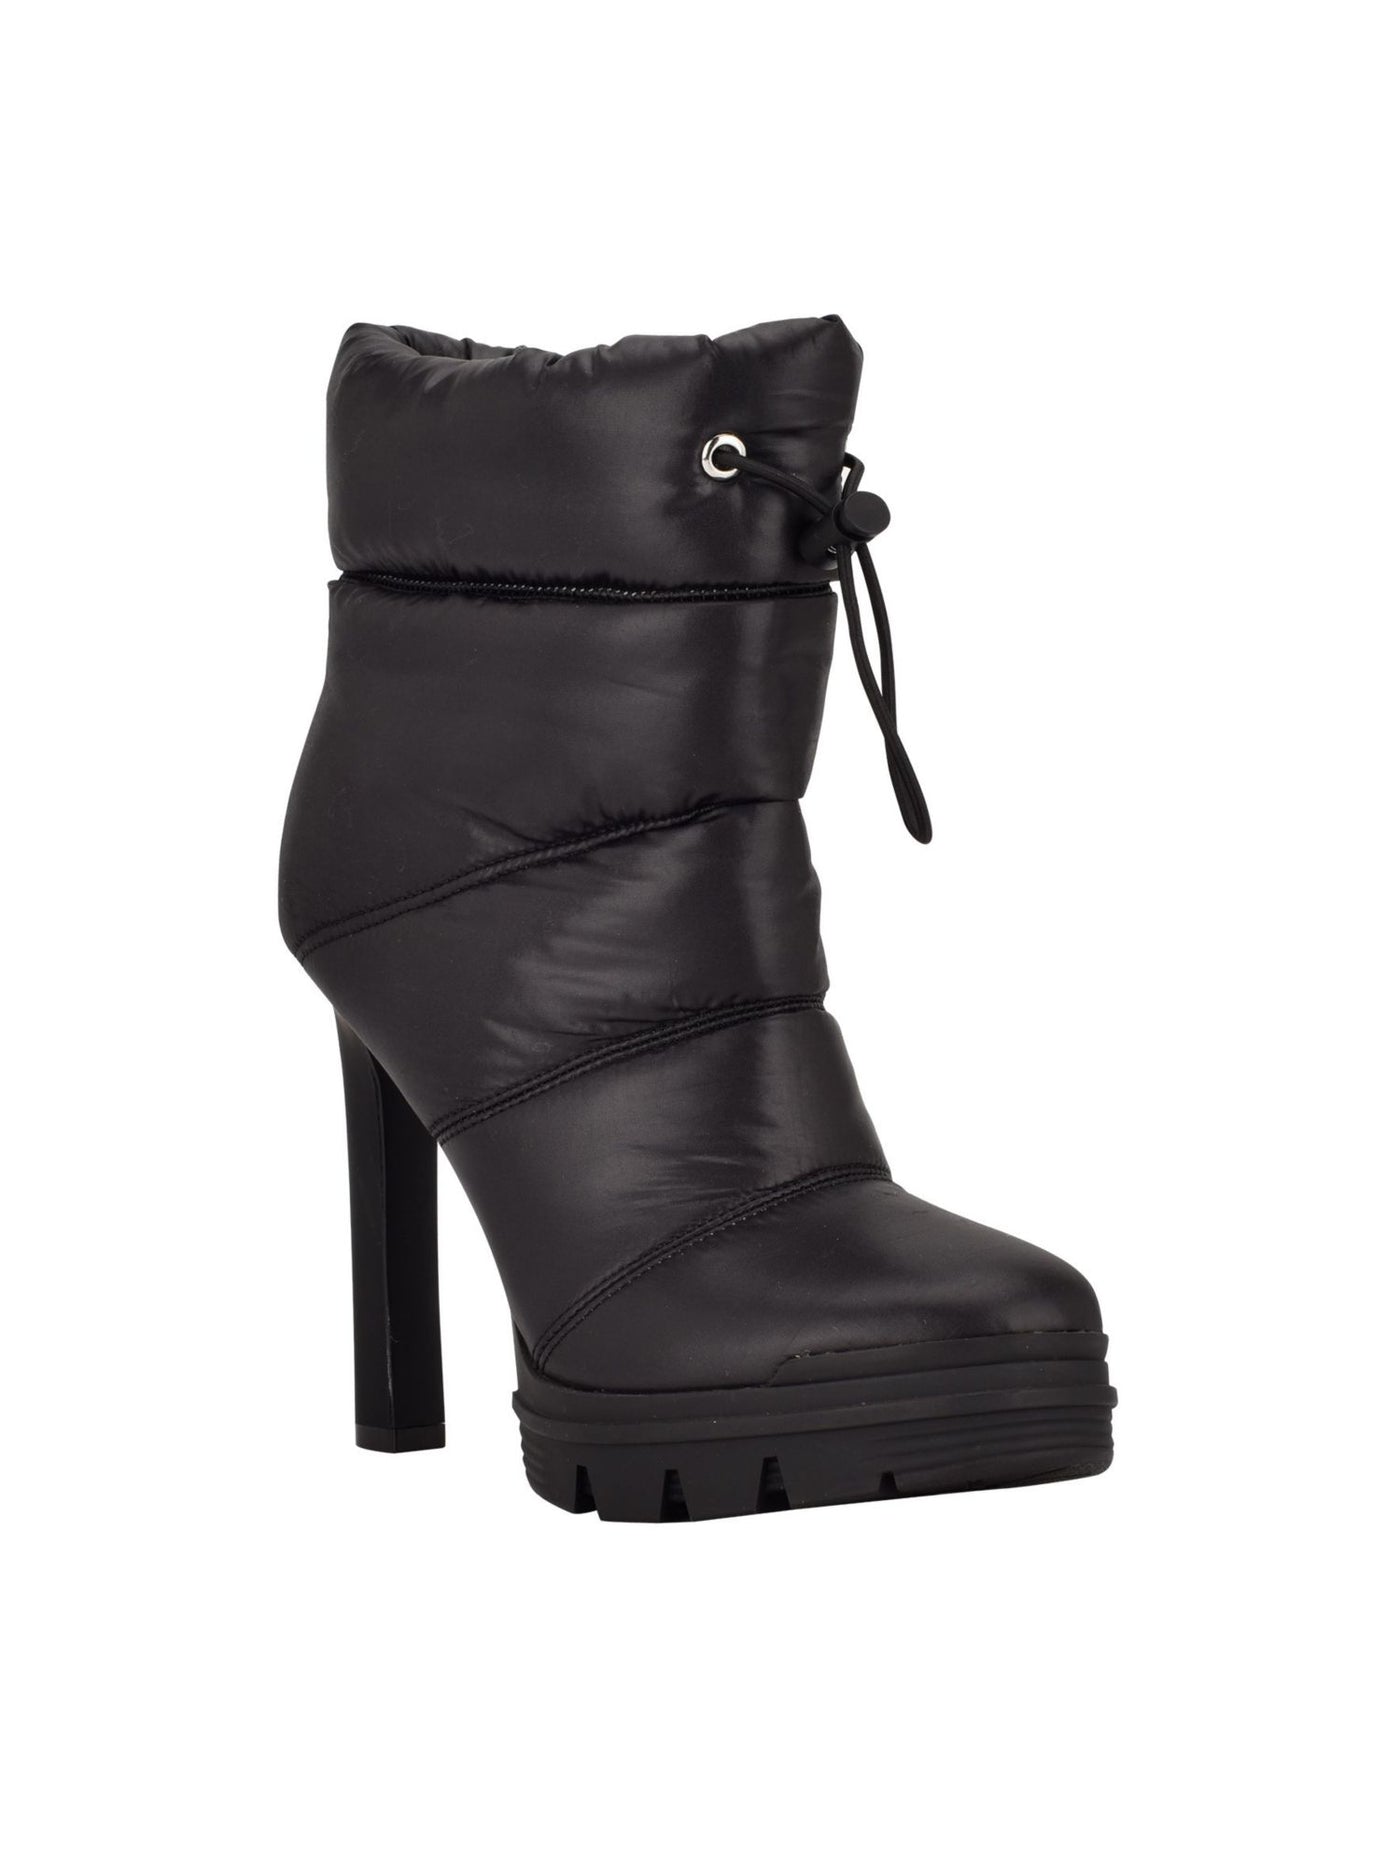 GUESS Womens Black Drawstring Puffy Upper Lug Sole Padded Jara Round Toe Stiletto Slip On Heeled Boots 7 M